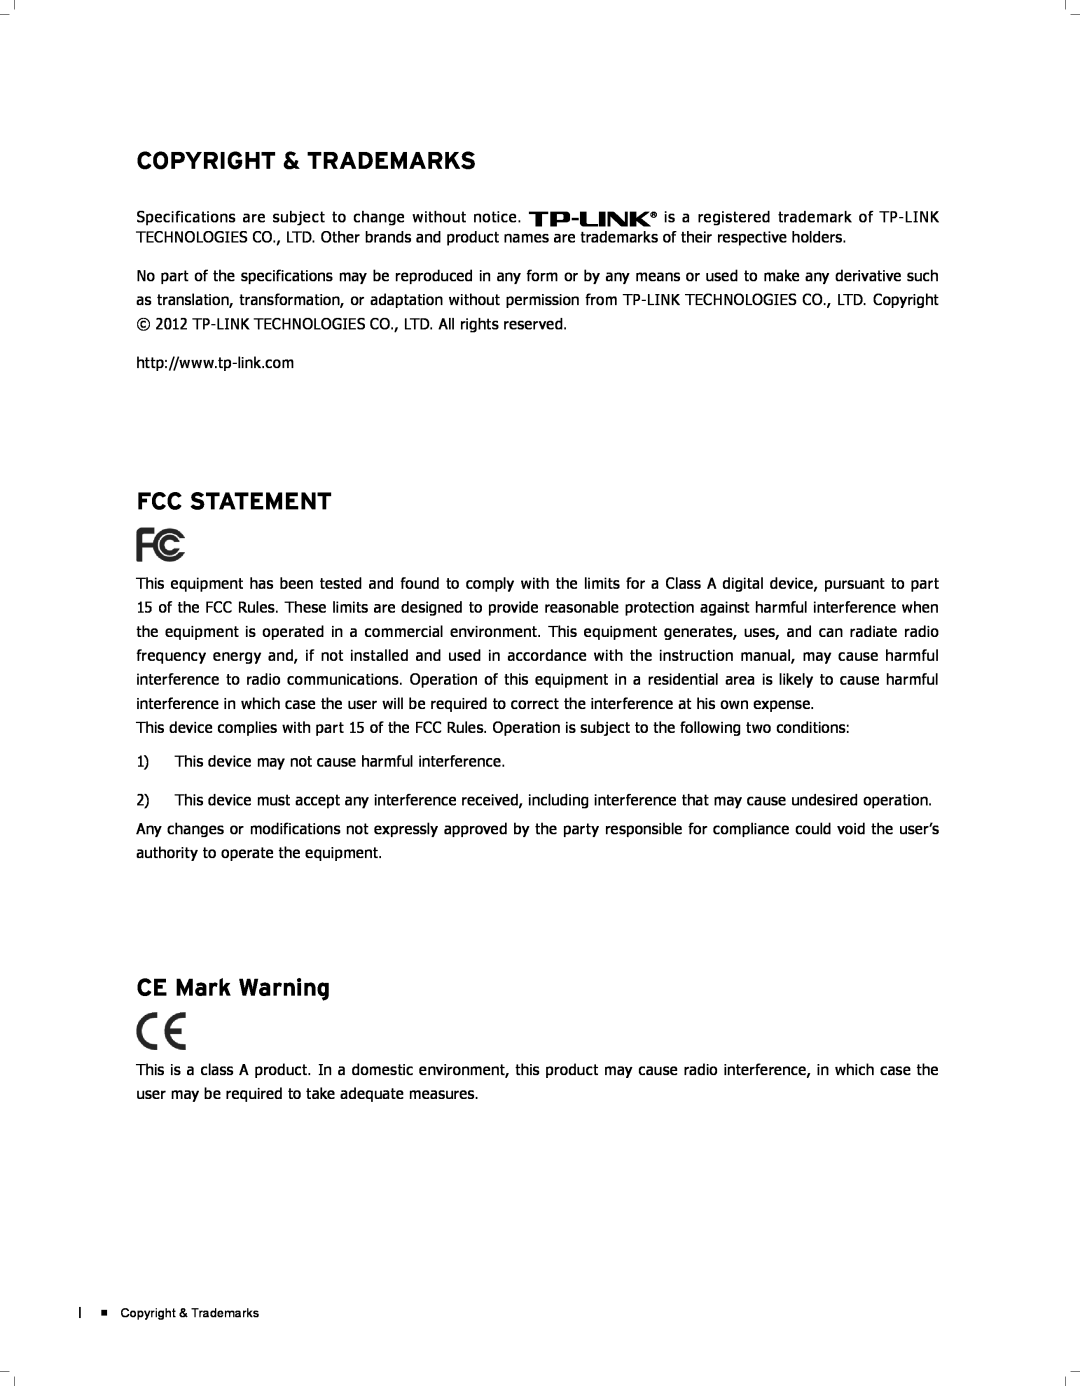 TP-Link TL-SG5412F, TL-SG5428 manual Copyright & Trademarks, Fcc Statement, CE Mark Warning 